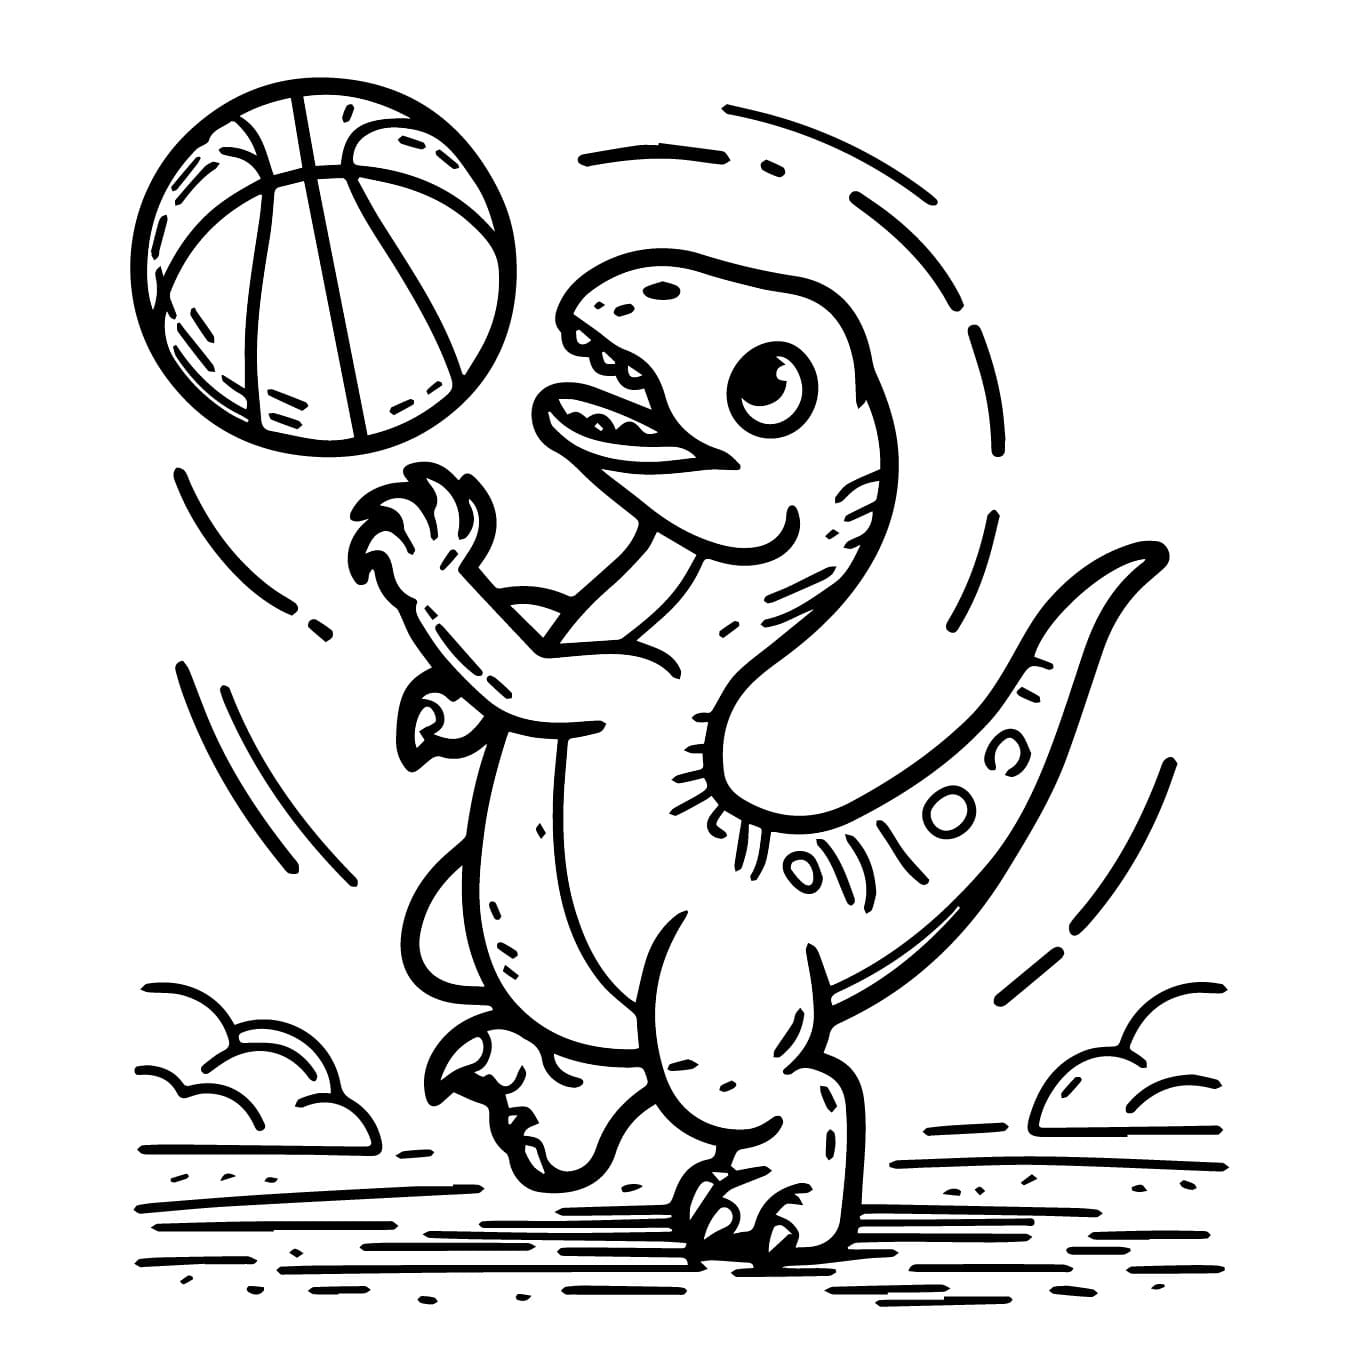 Vélociraptor Joue au Basket-ball coloring page